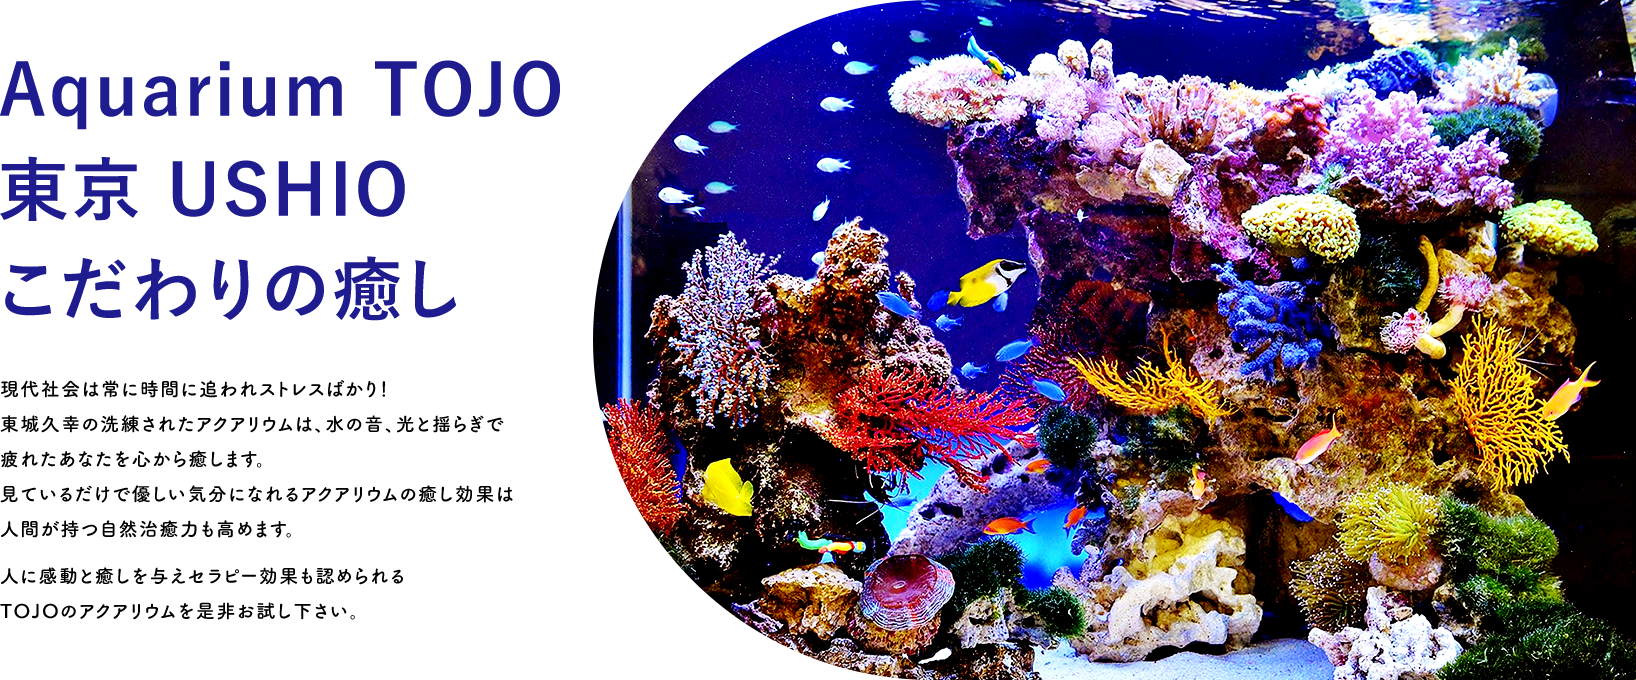 Aquarium TOJO 東京 USHIO こだわりの癒し